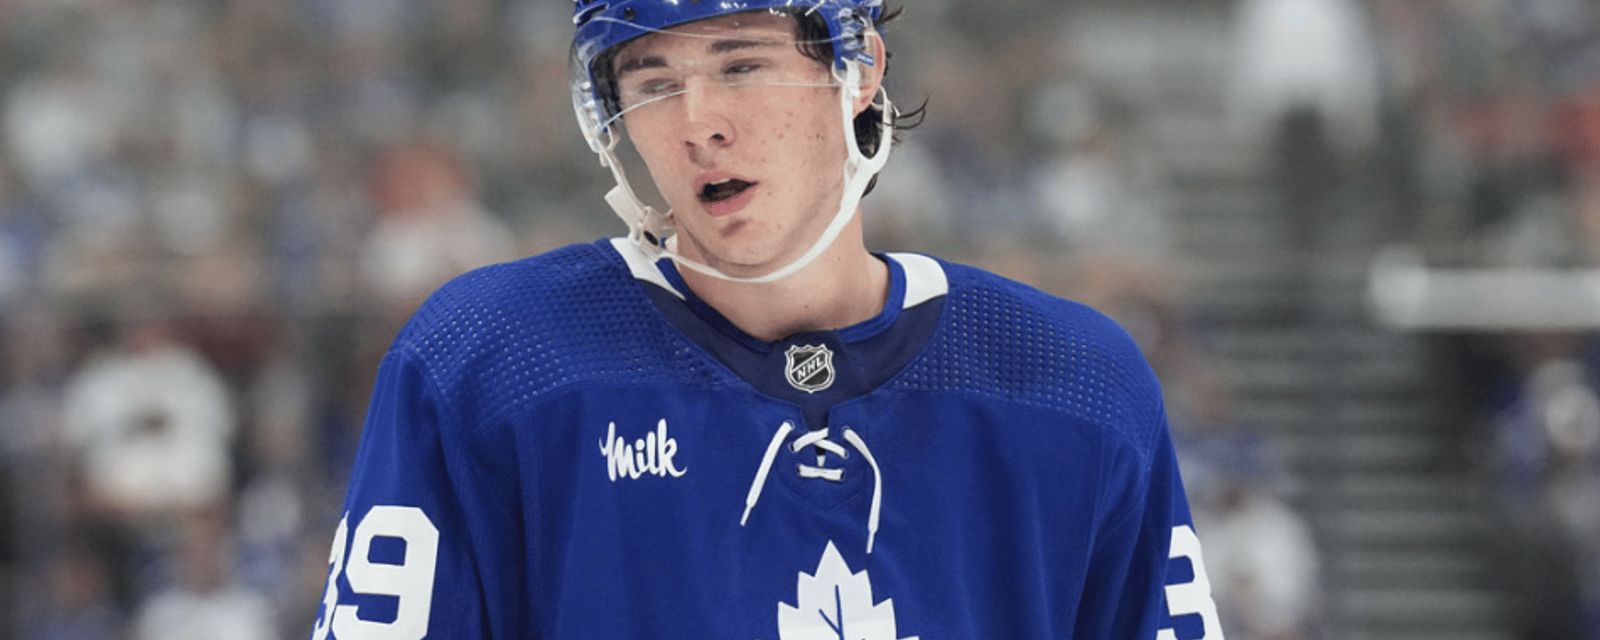 Crushing demotion for Leafs Fraser Minten